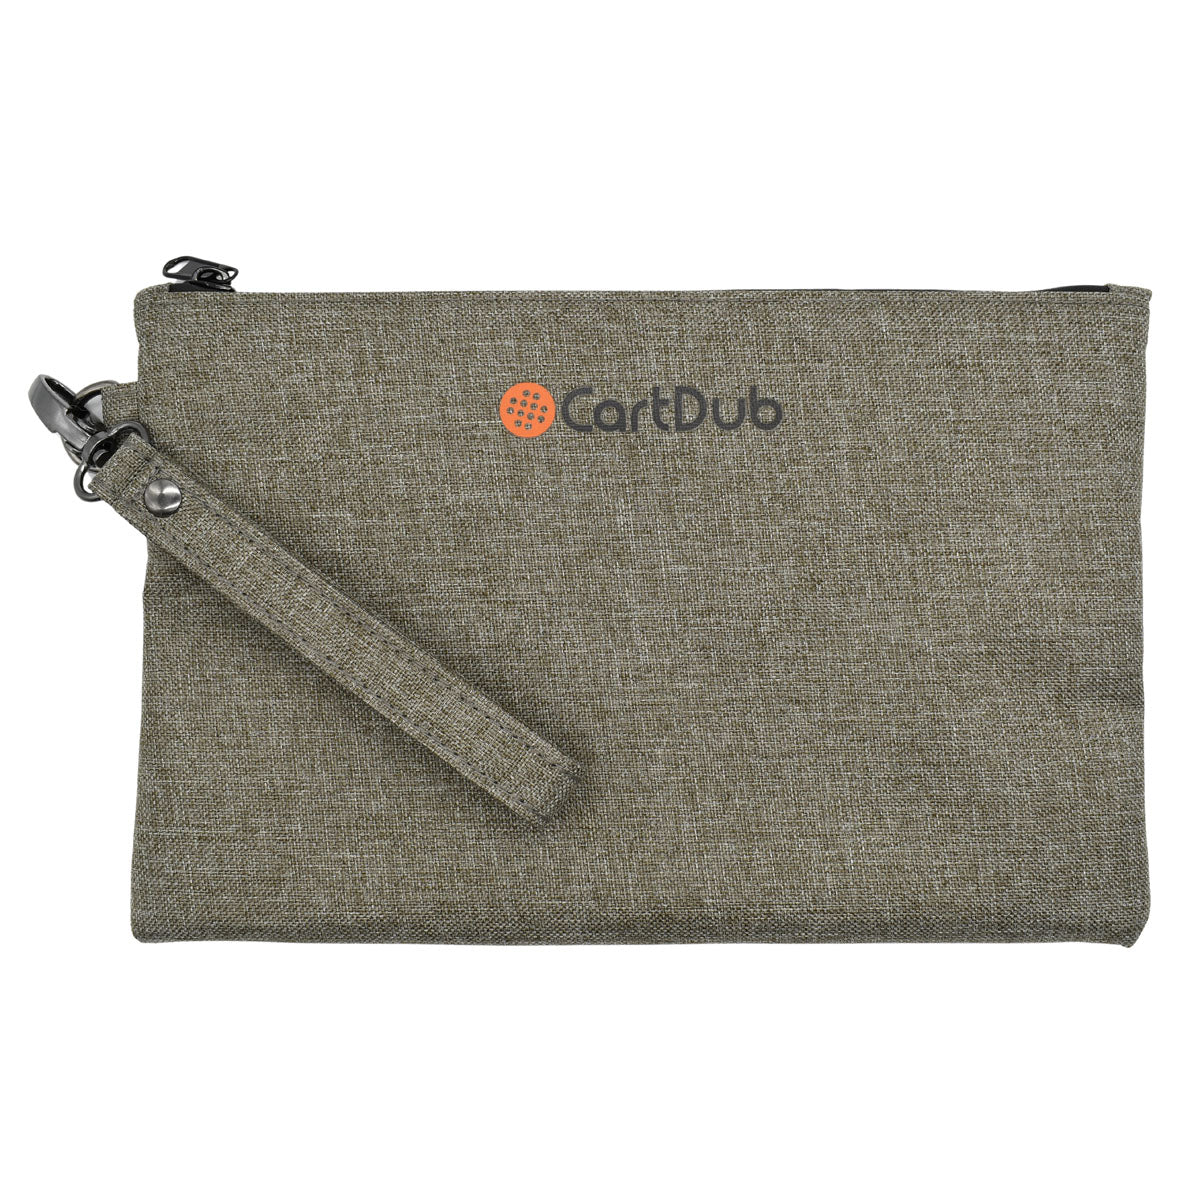 CartDub Smell Proof Bag 